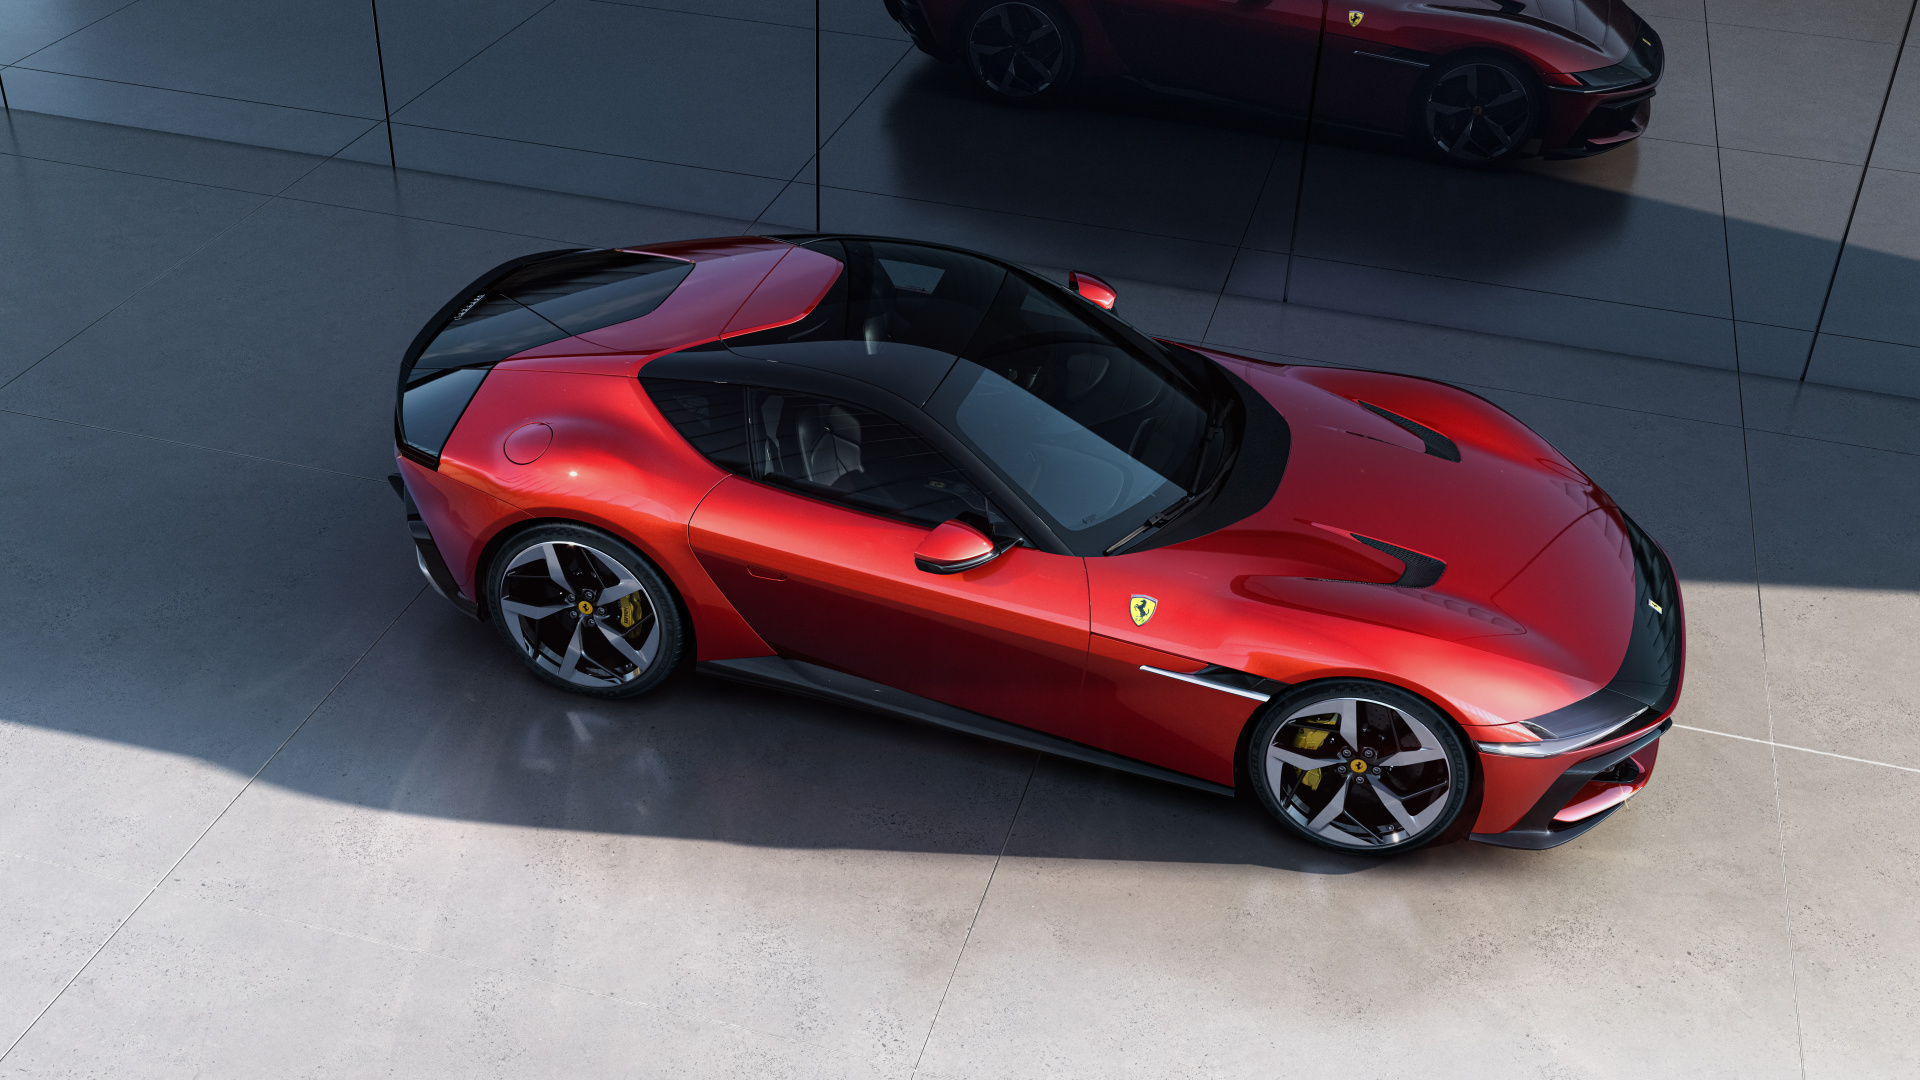 SMALL_New_Ferrari_V12_ext_01_Design_red_media_ddd95862-9b9c-43fa-9a2c-861fa3ac5753